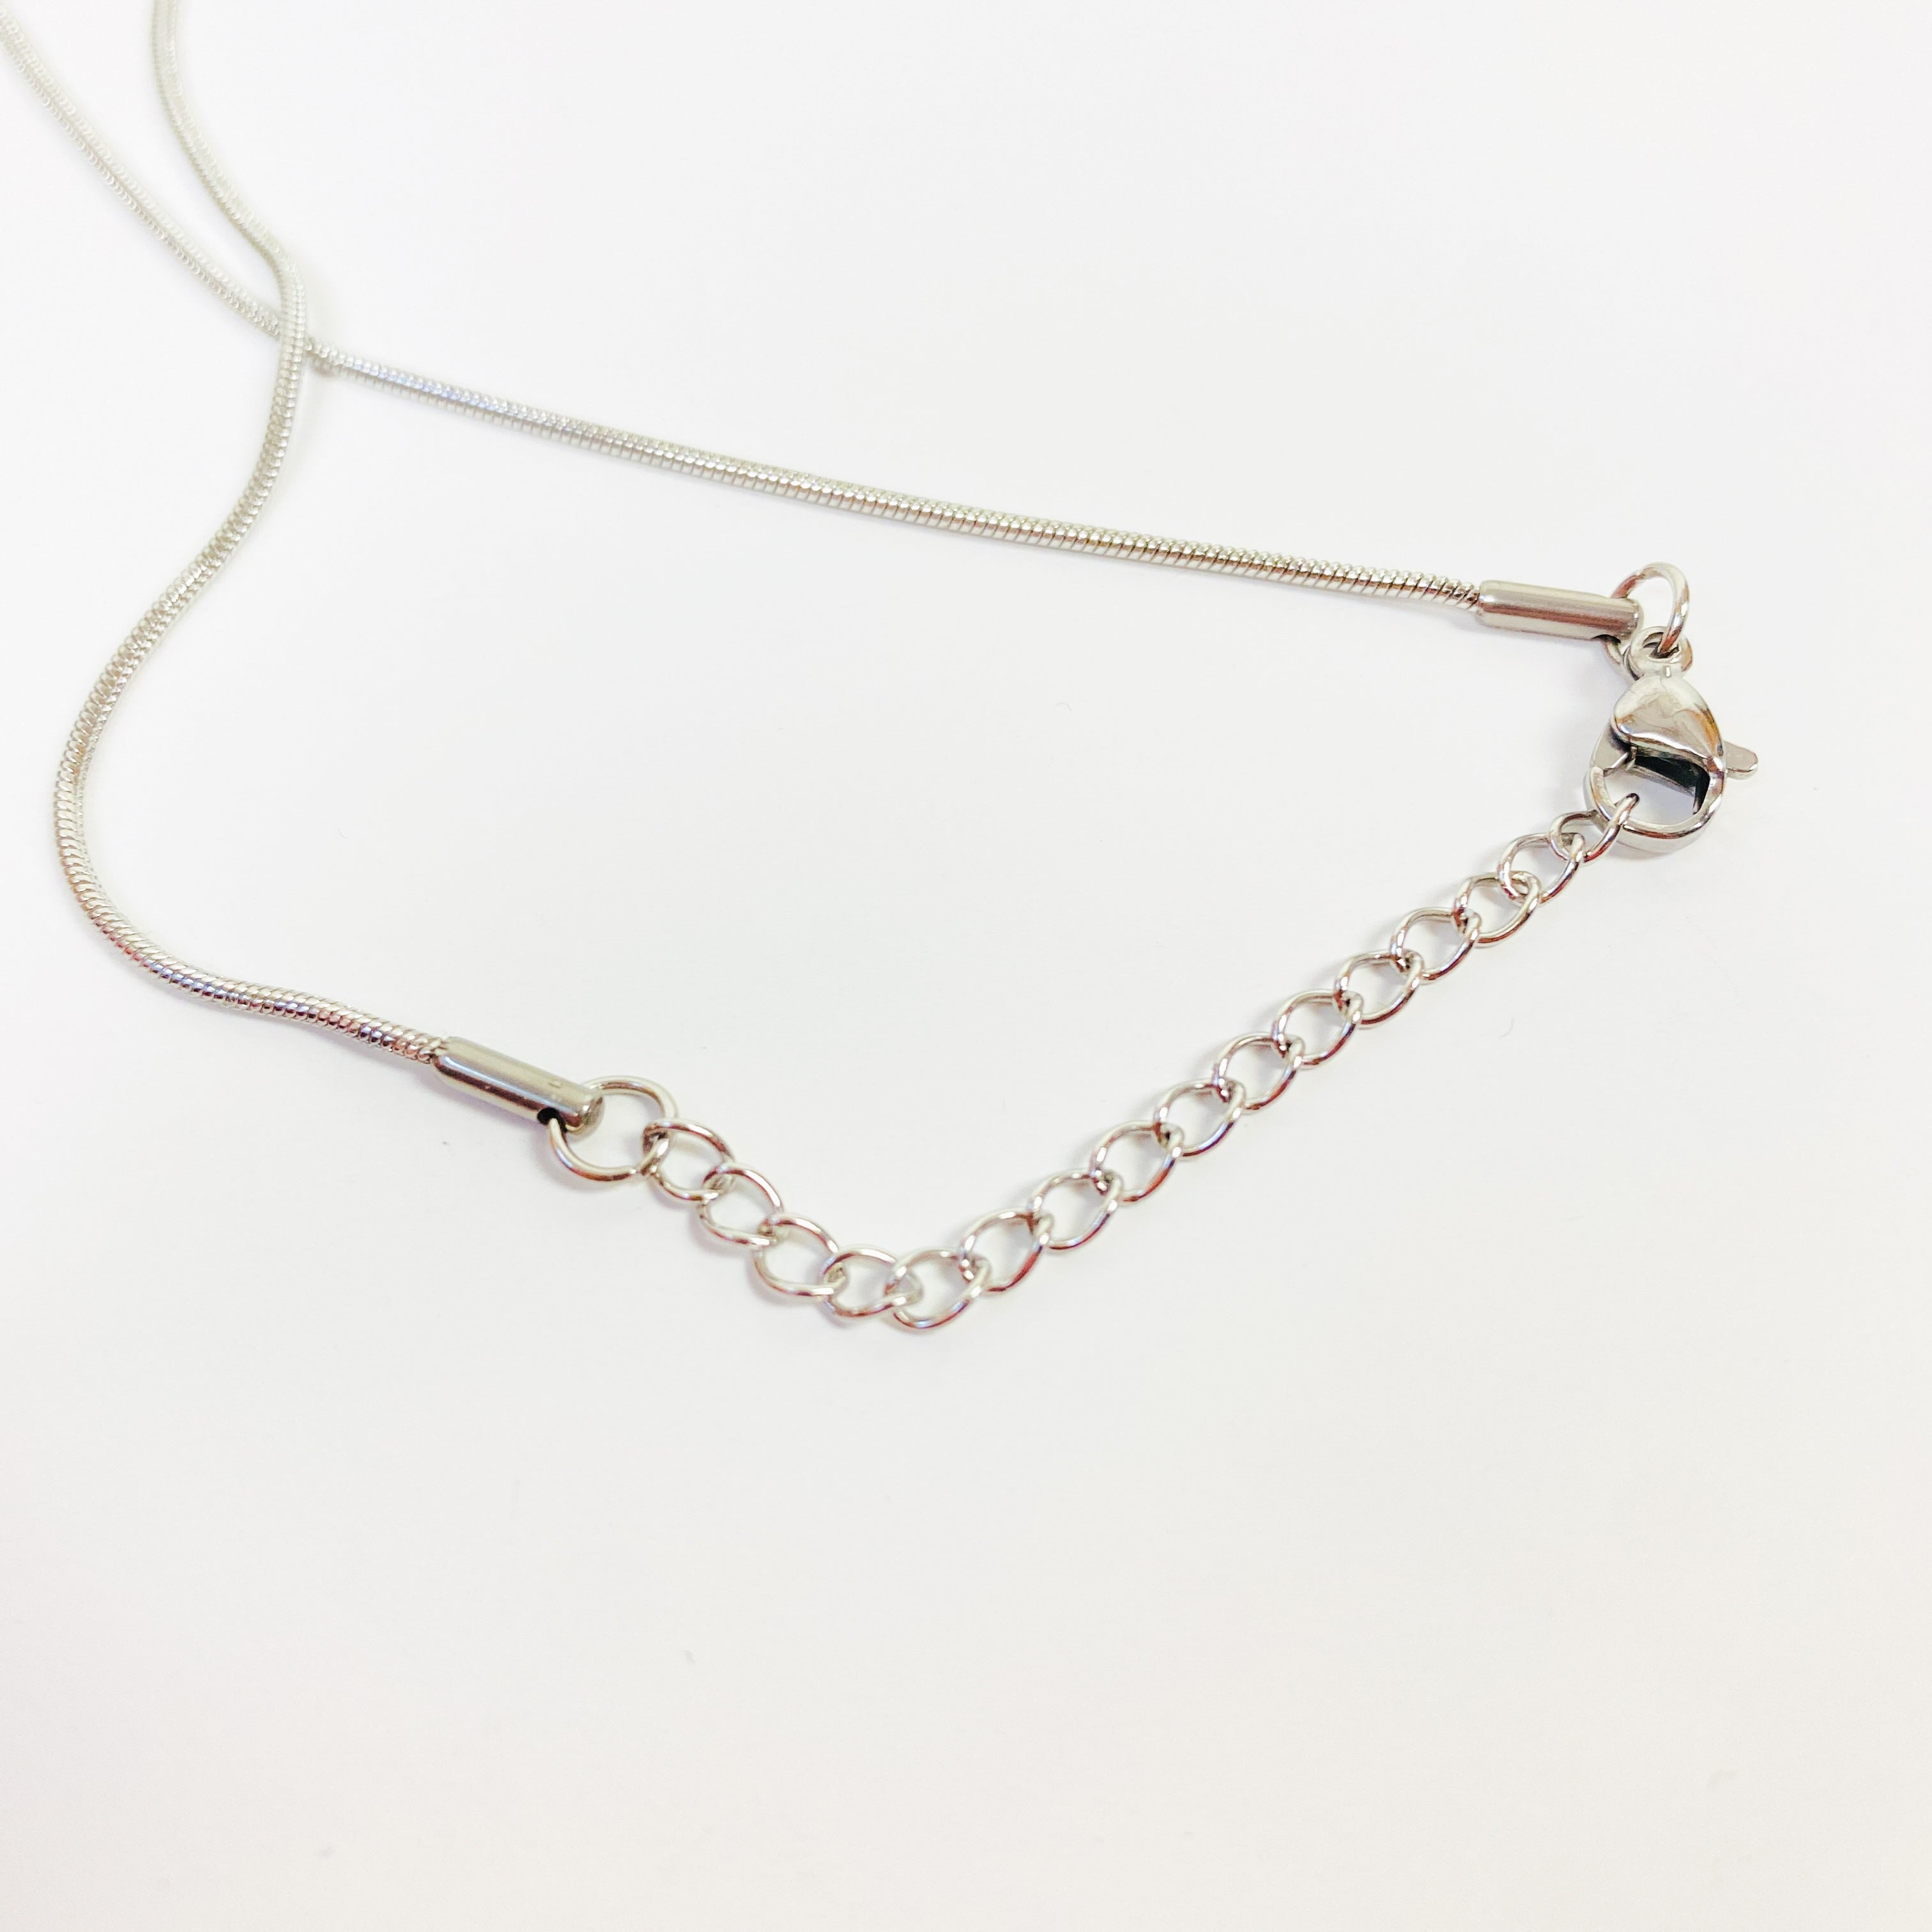 Retro Link Necklace Chain Silver